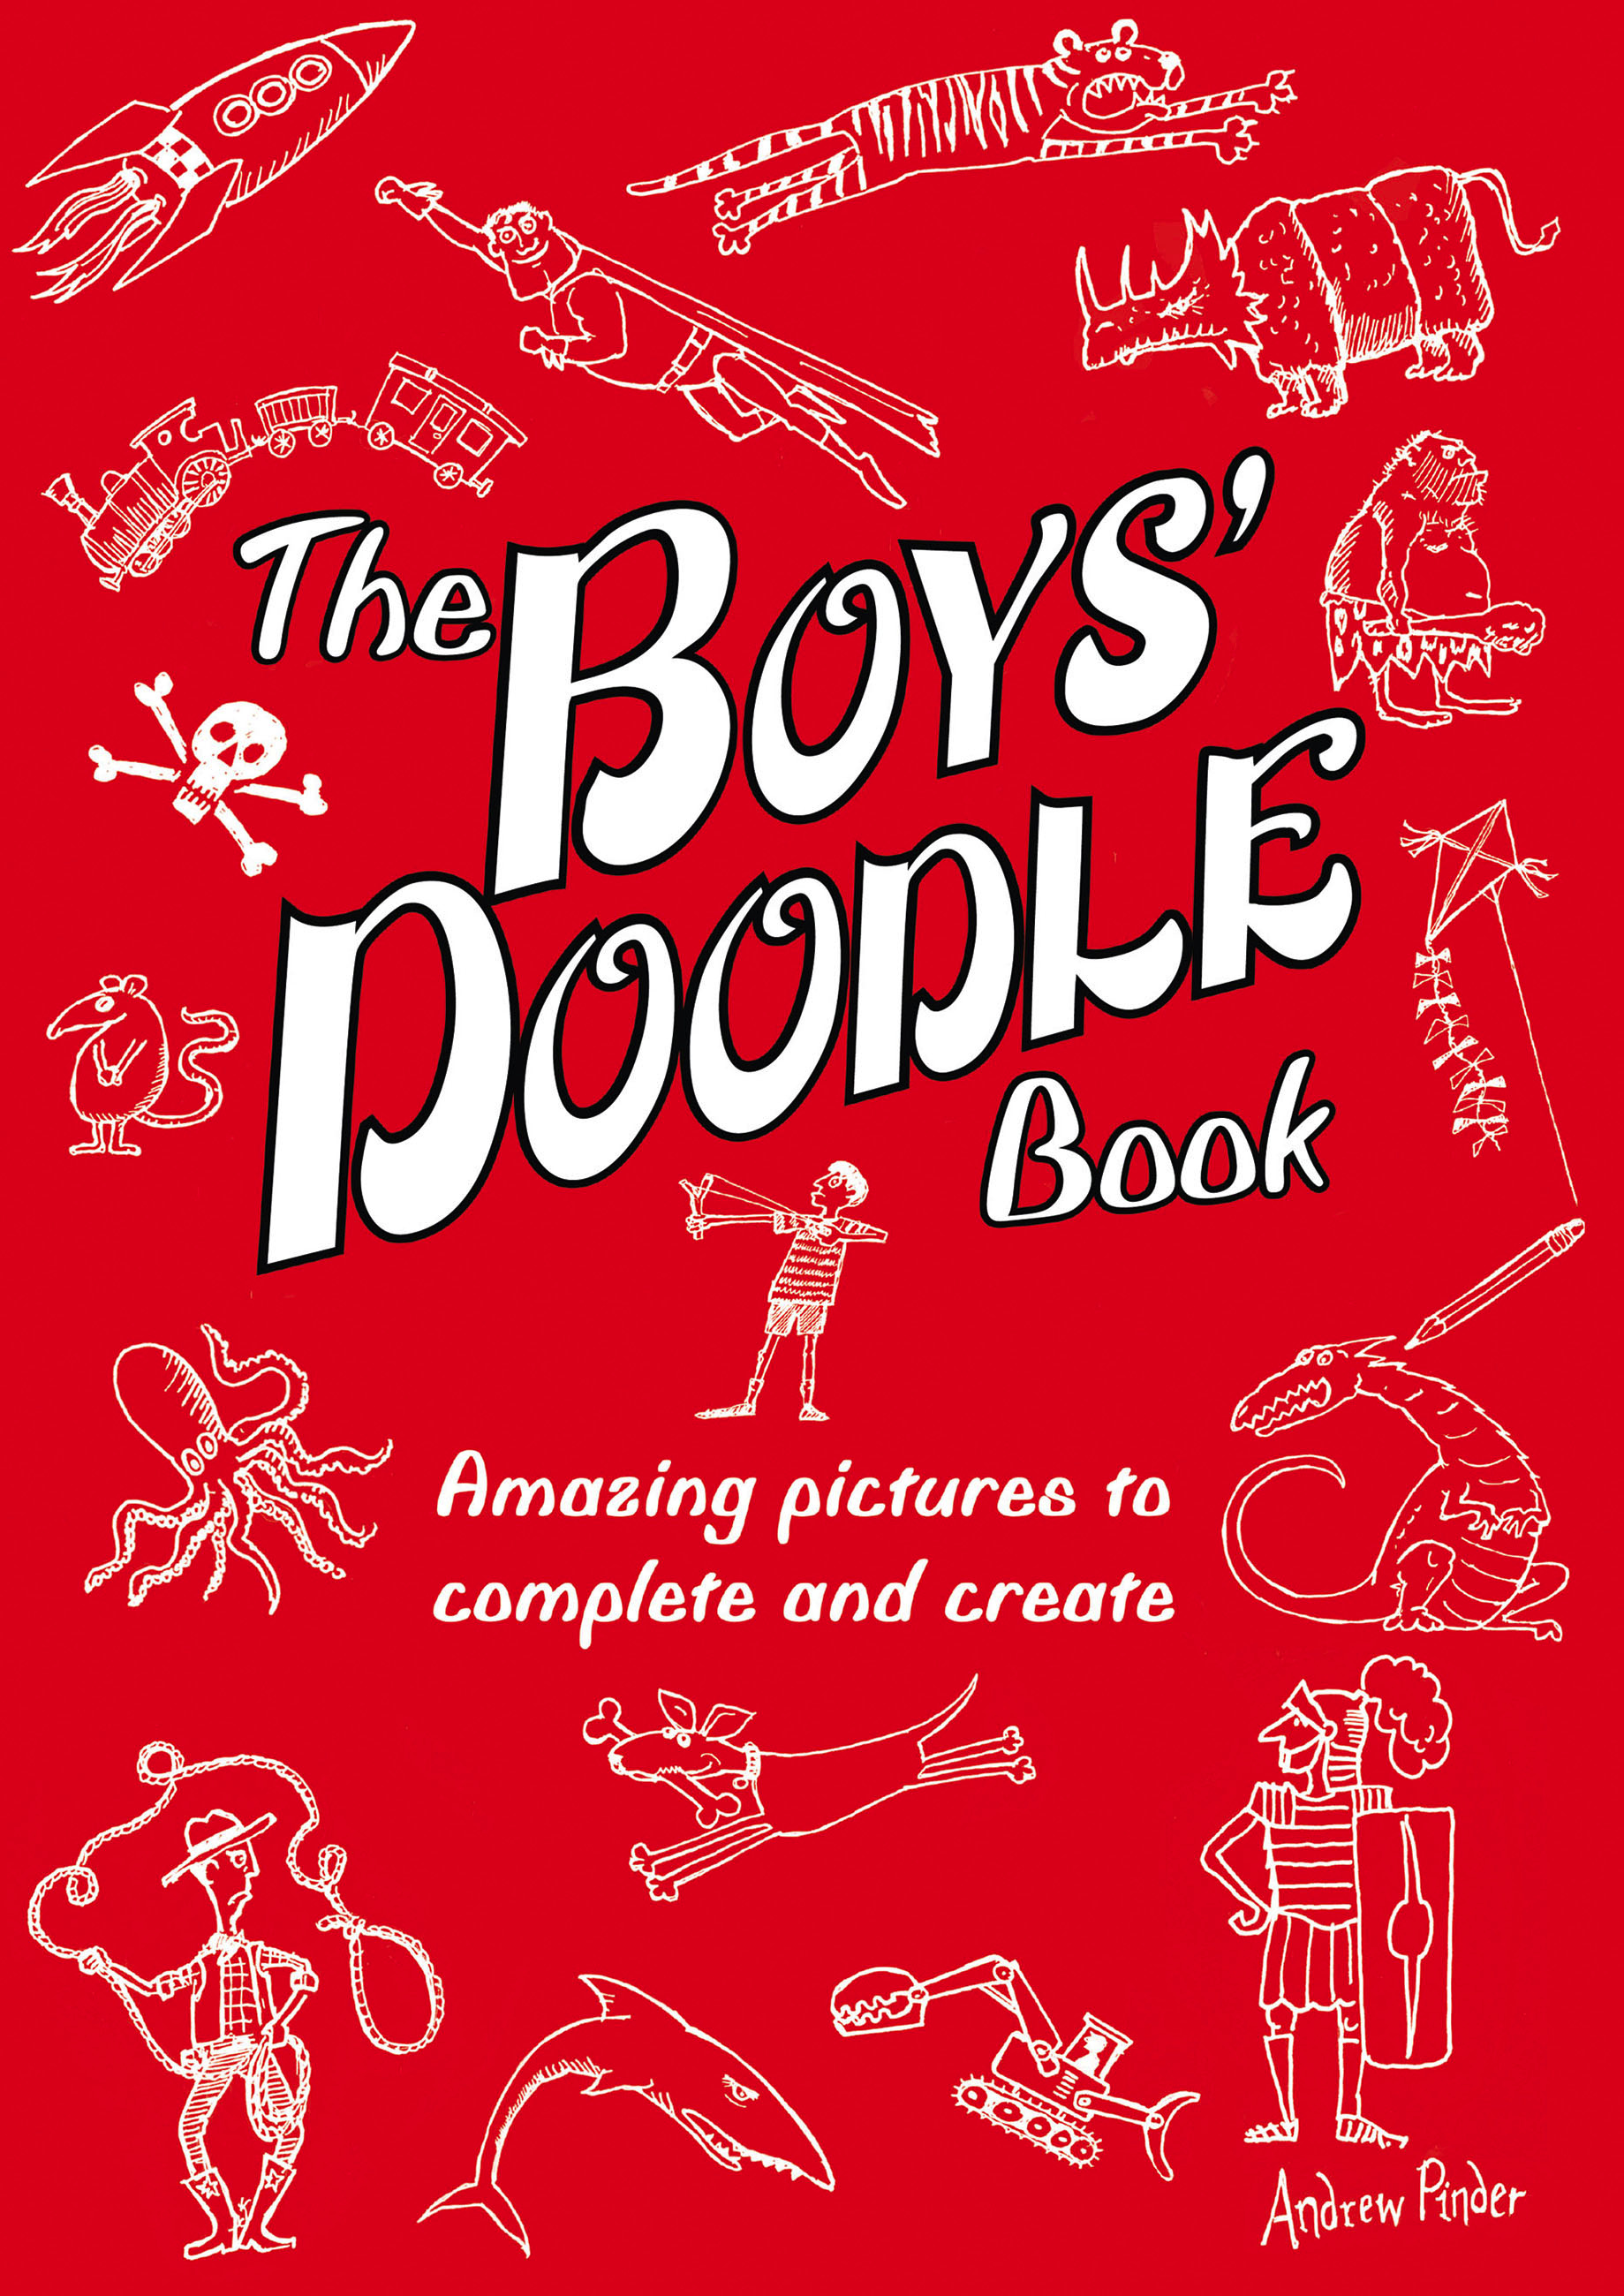 My boy book. Boys will be boys книга. Doodle boy. The book of boy. Boys will be boys книга1993.